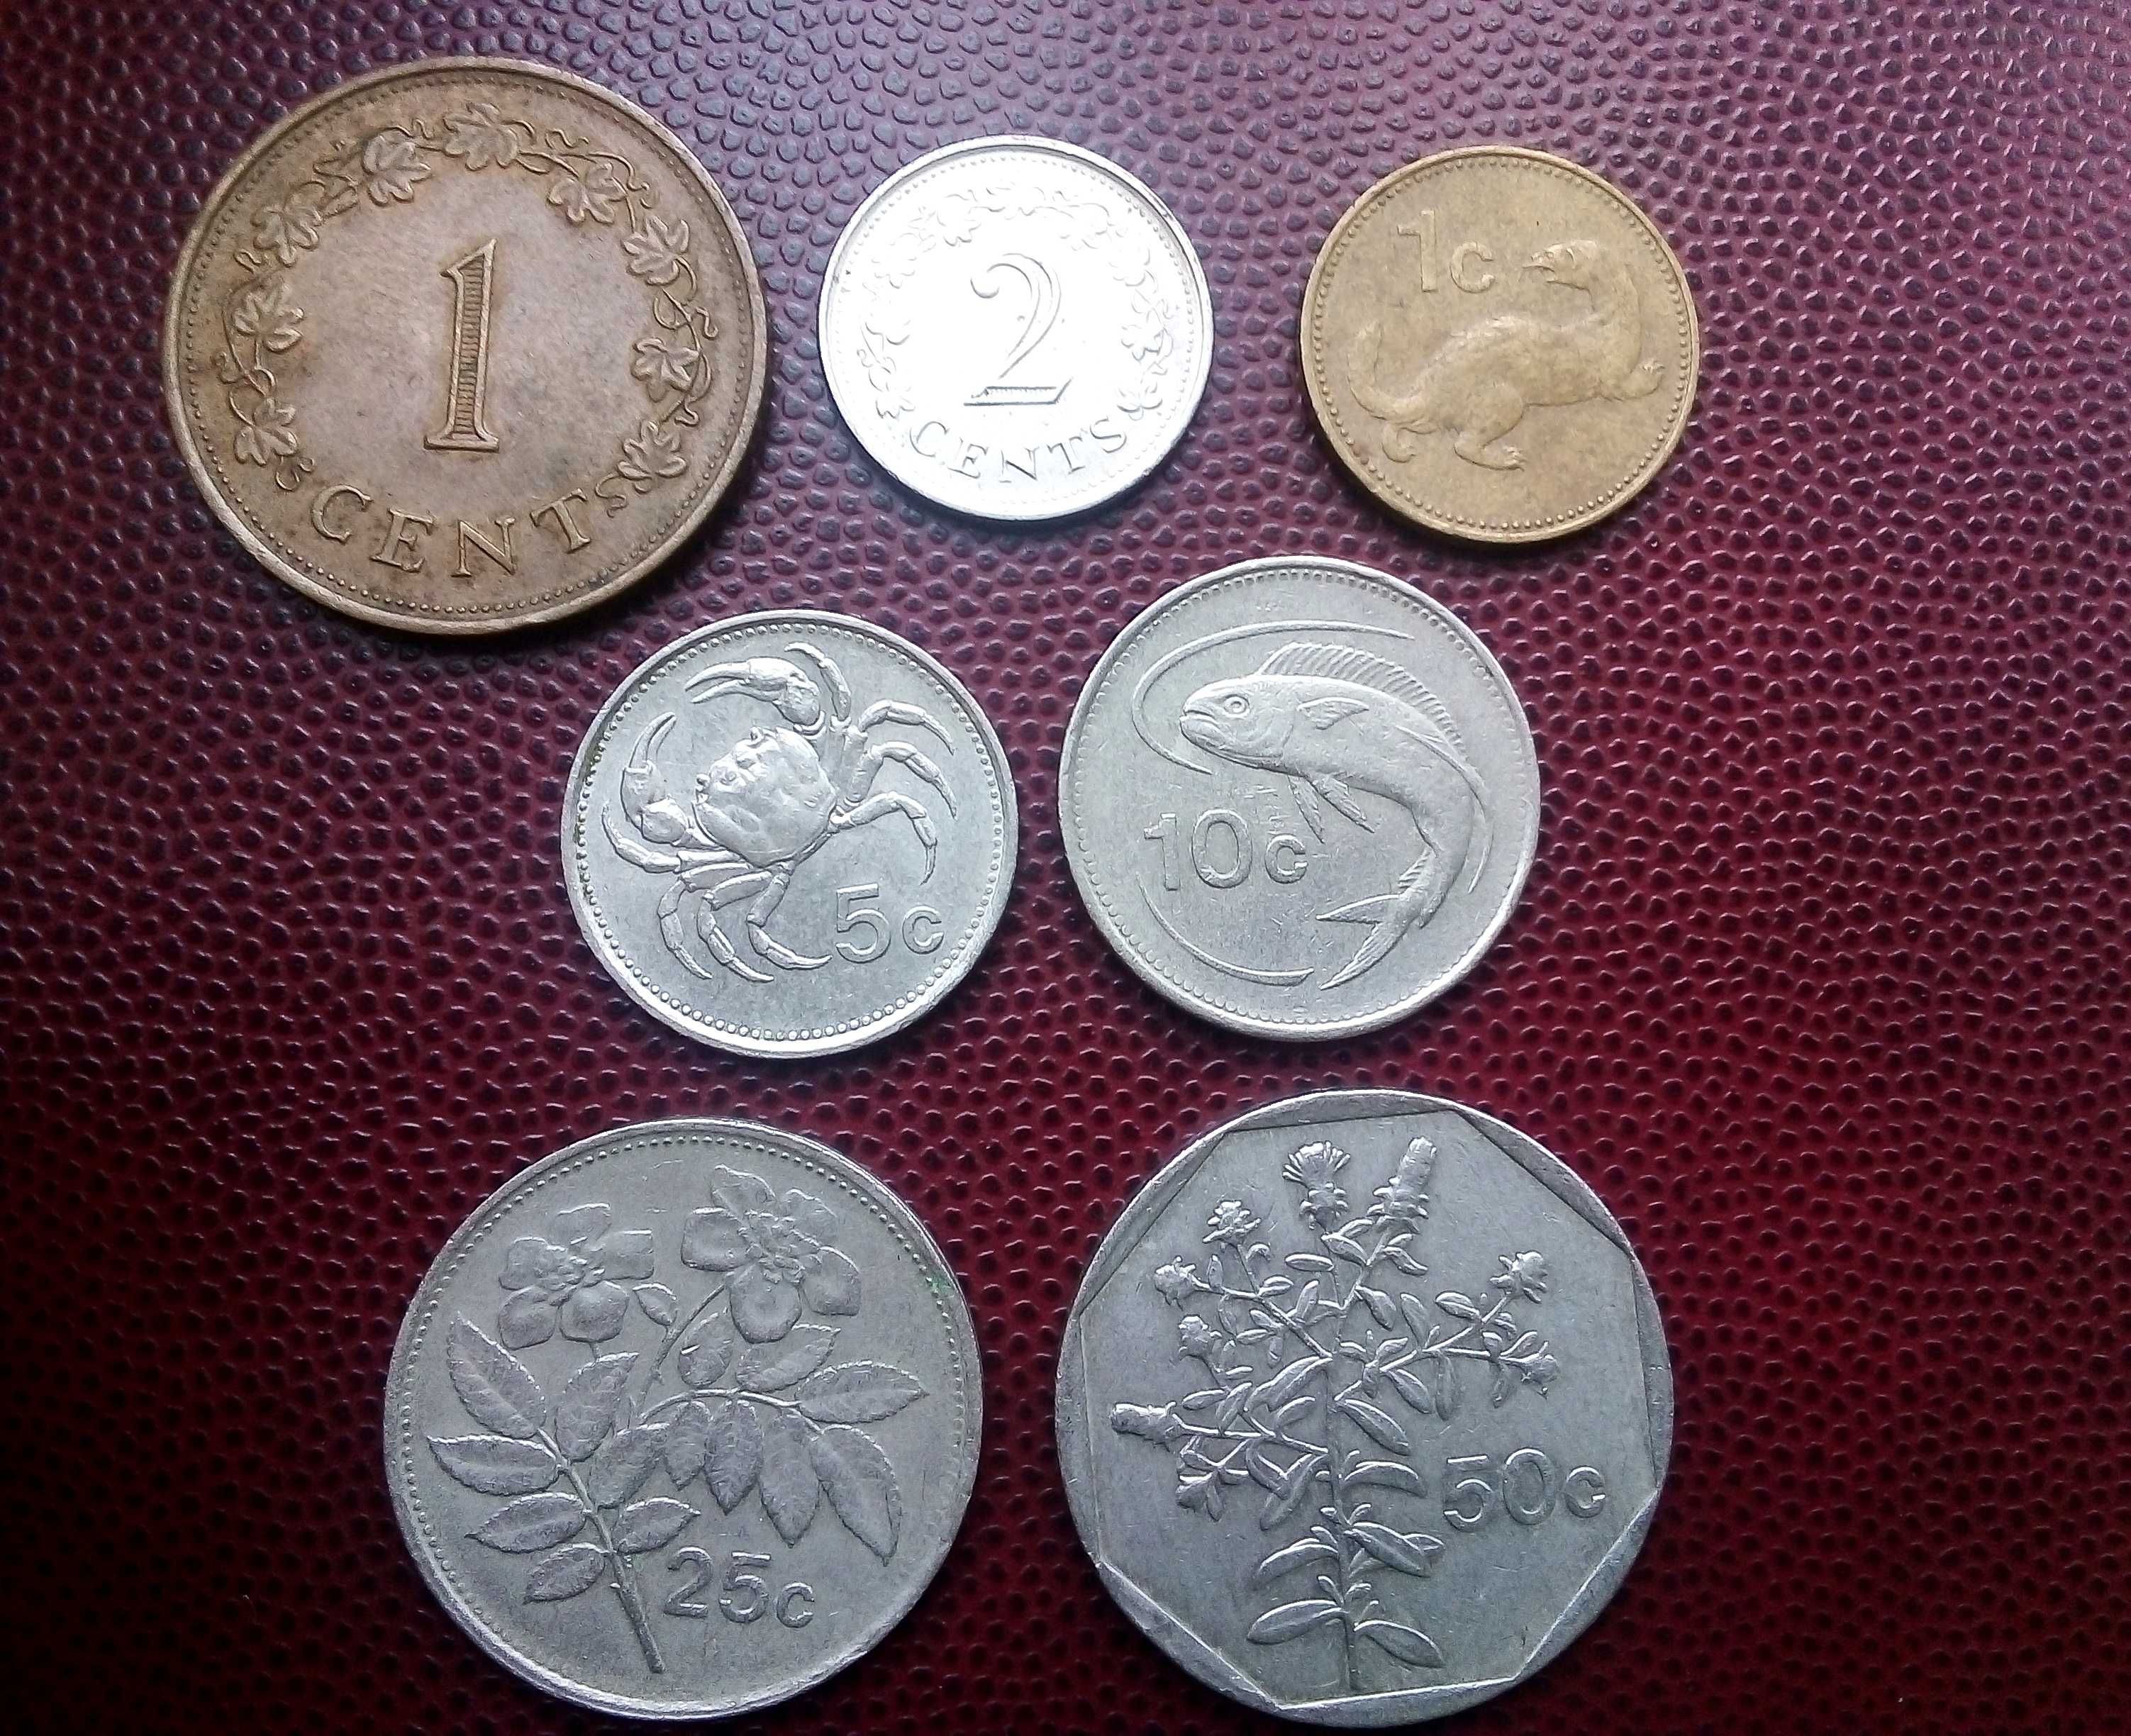 Коллекция монет Уганда, Замбия, ЮАР, Япония, Исландия, Мальта